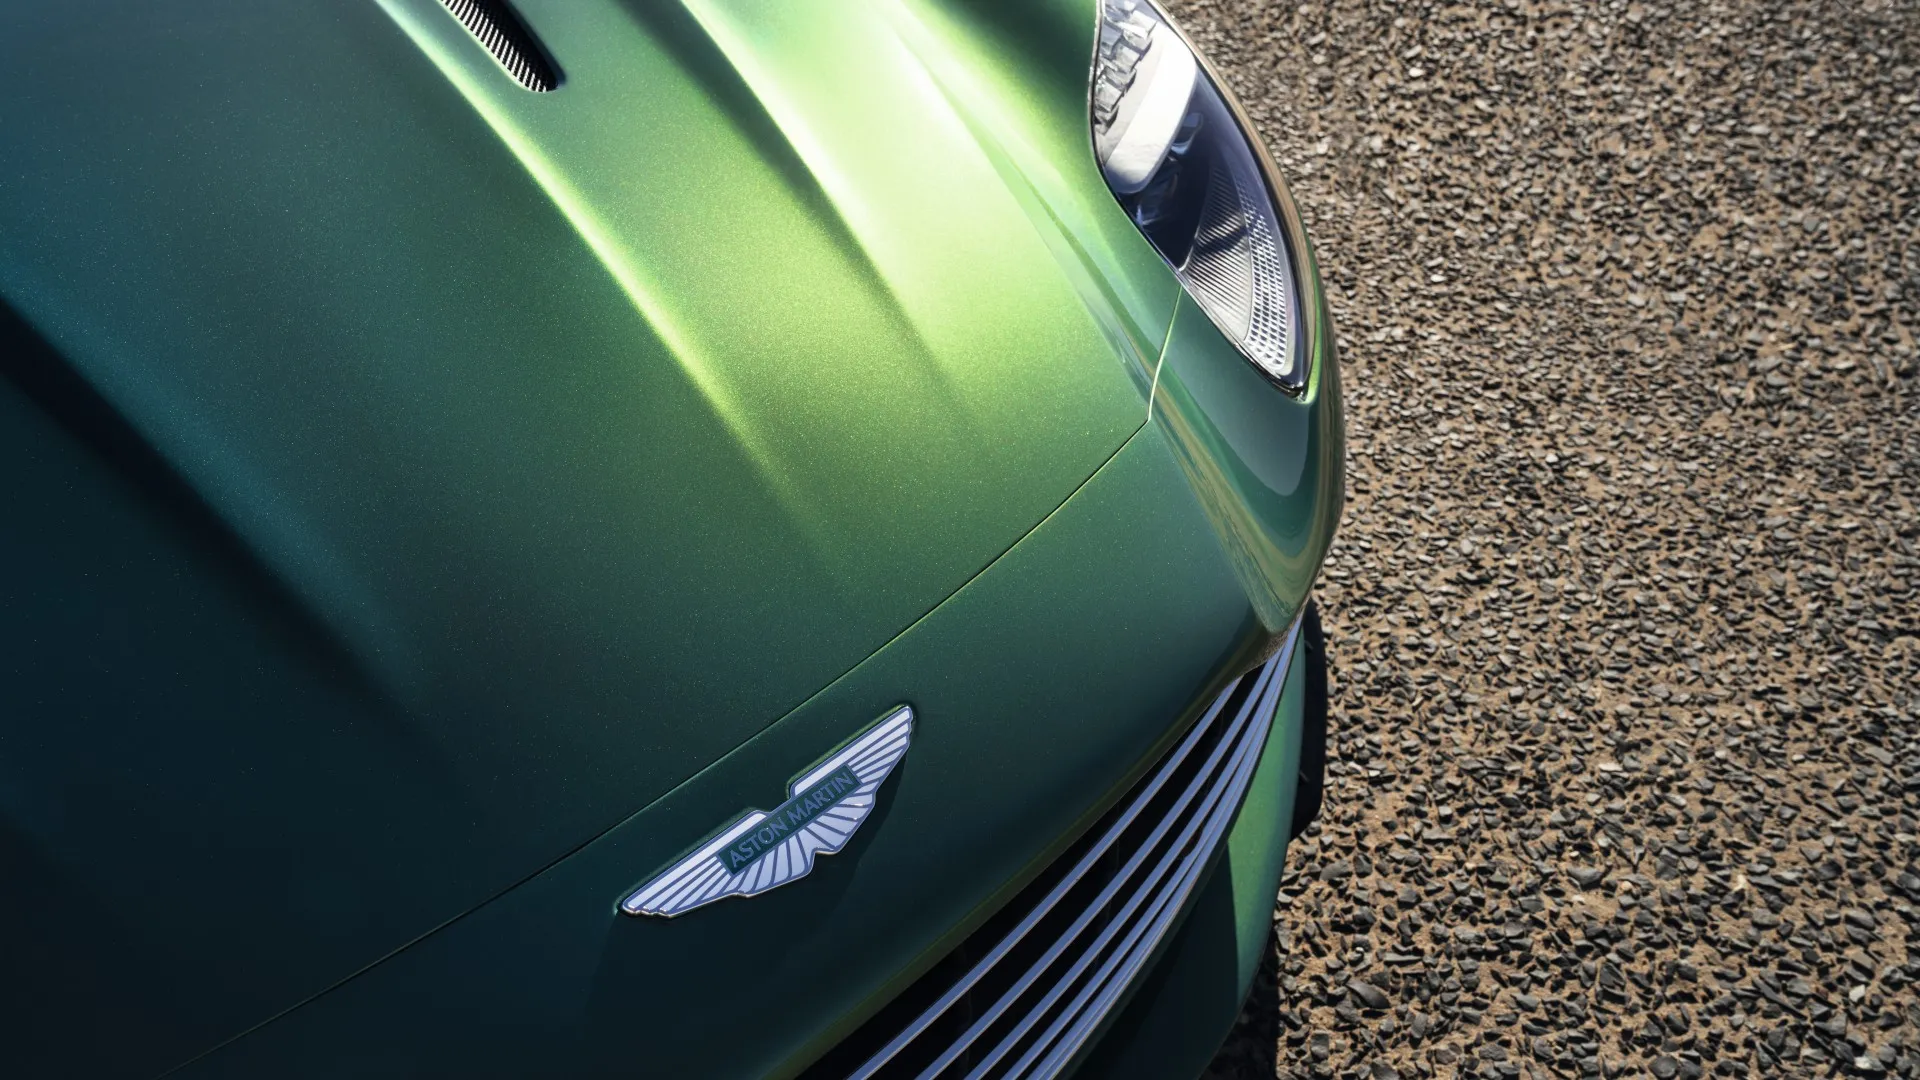 Aston Martin recurrirá a componentes de Geely en sus futuros modelos